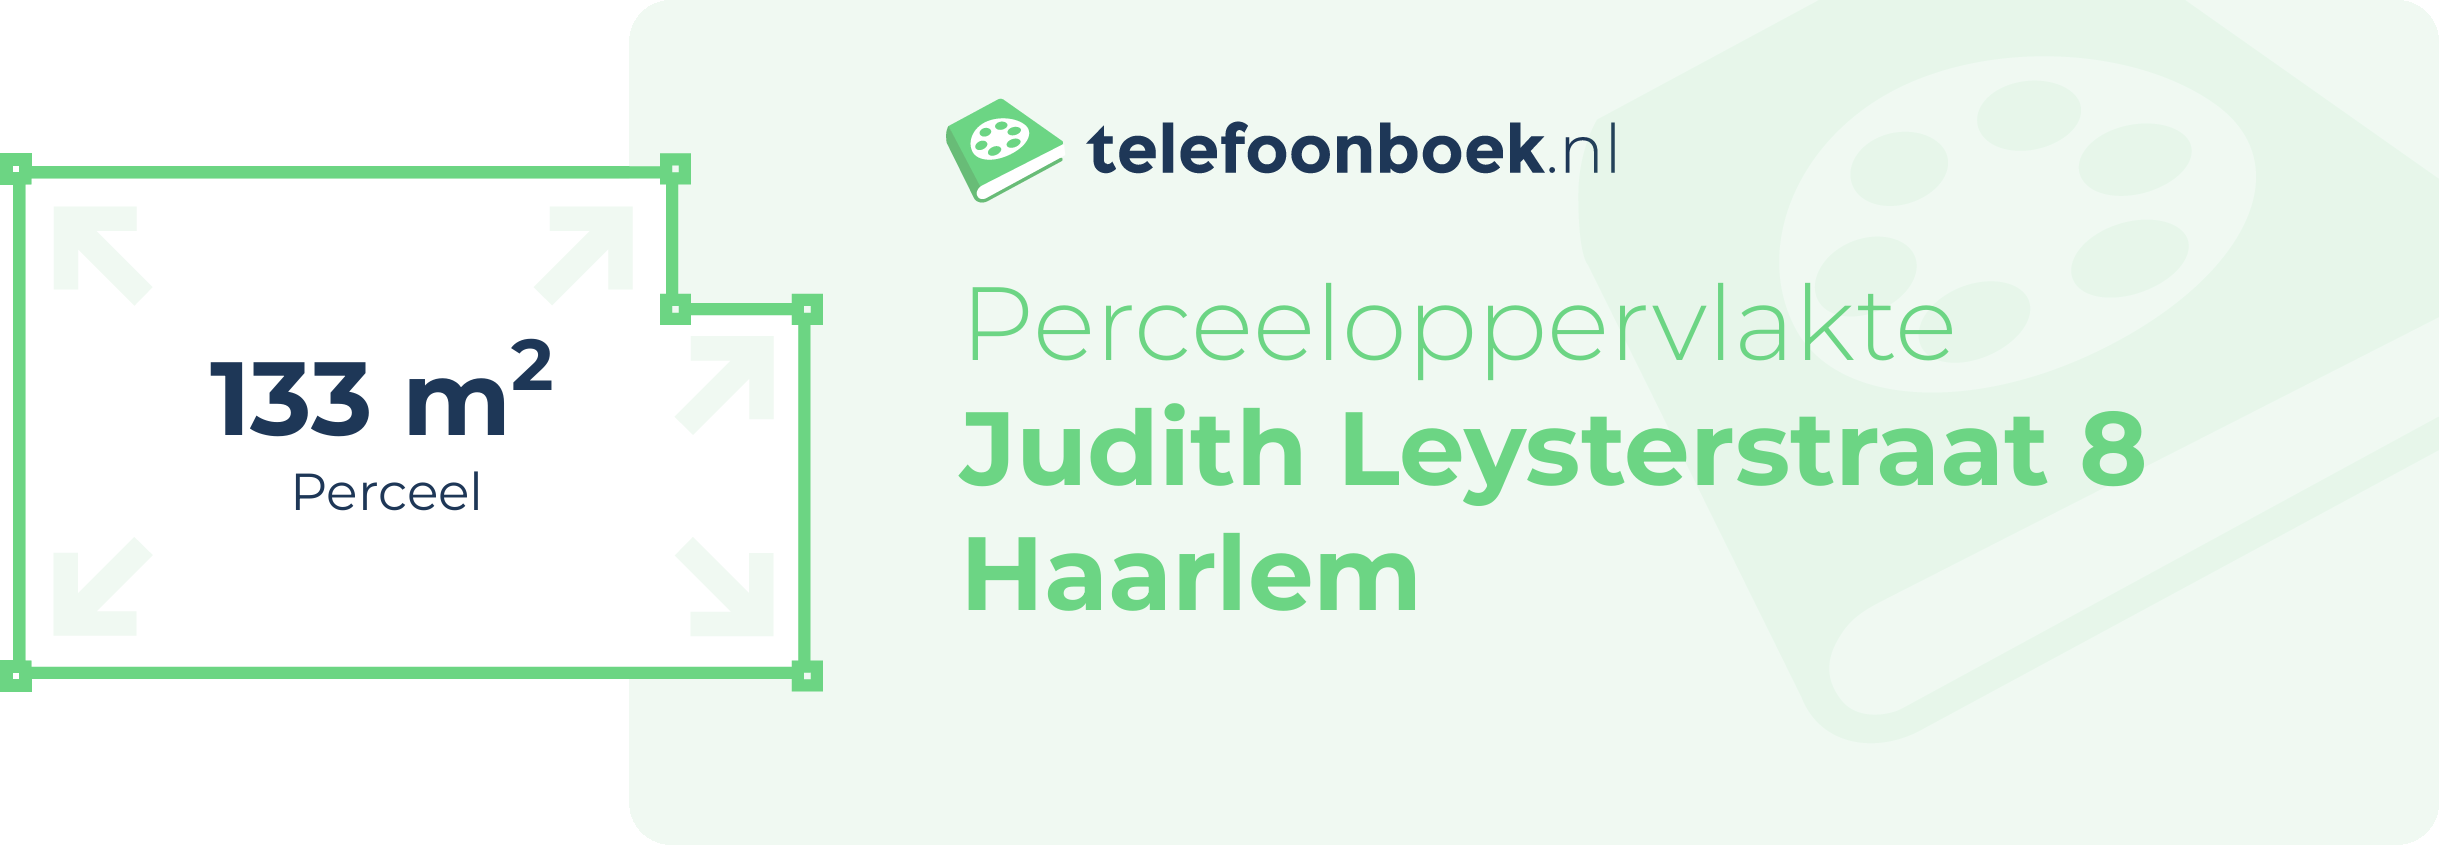 Perceeloppervlakte Judith Leysterstraat 8 Haarlem